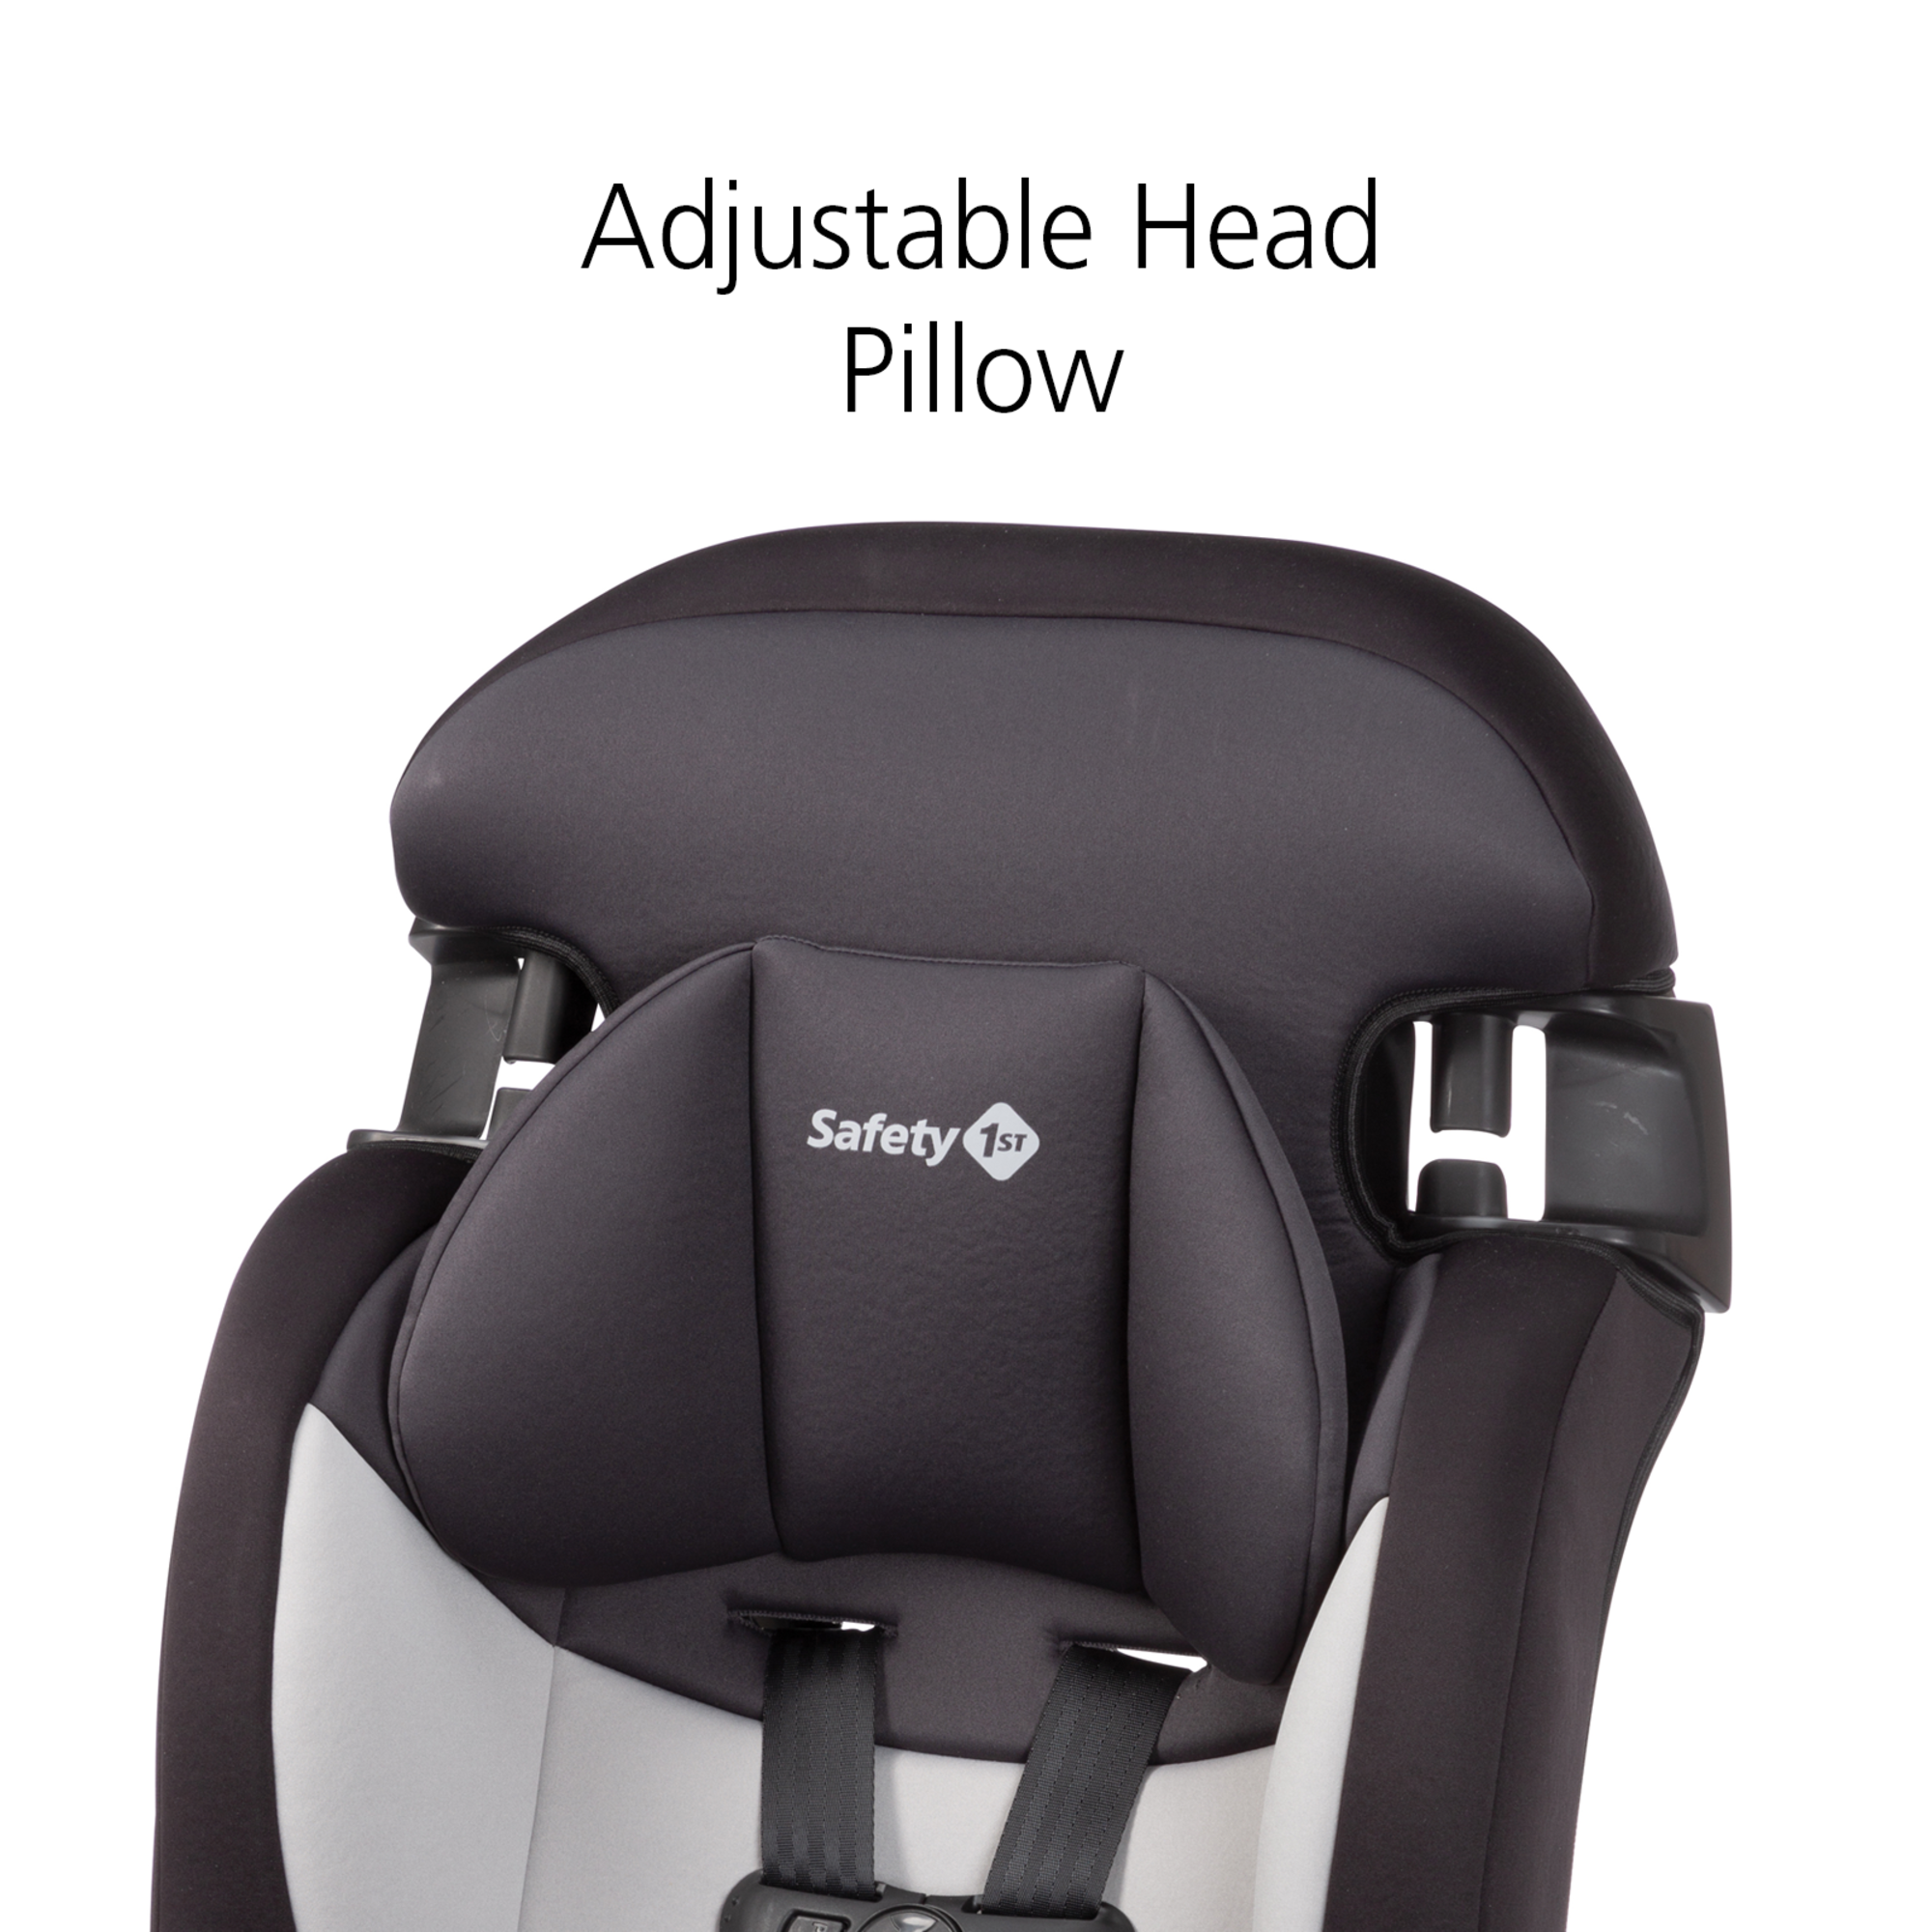 Adjustable head pillow